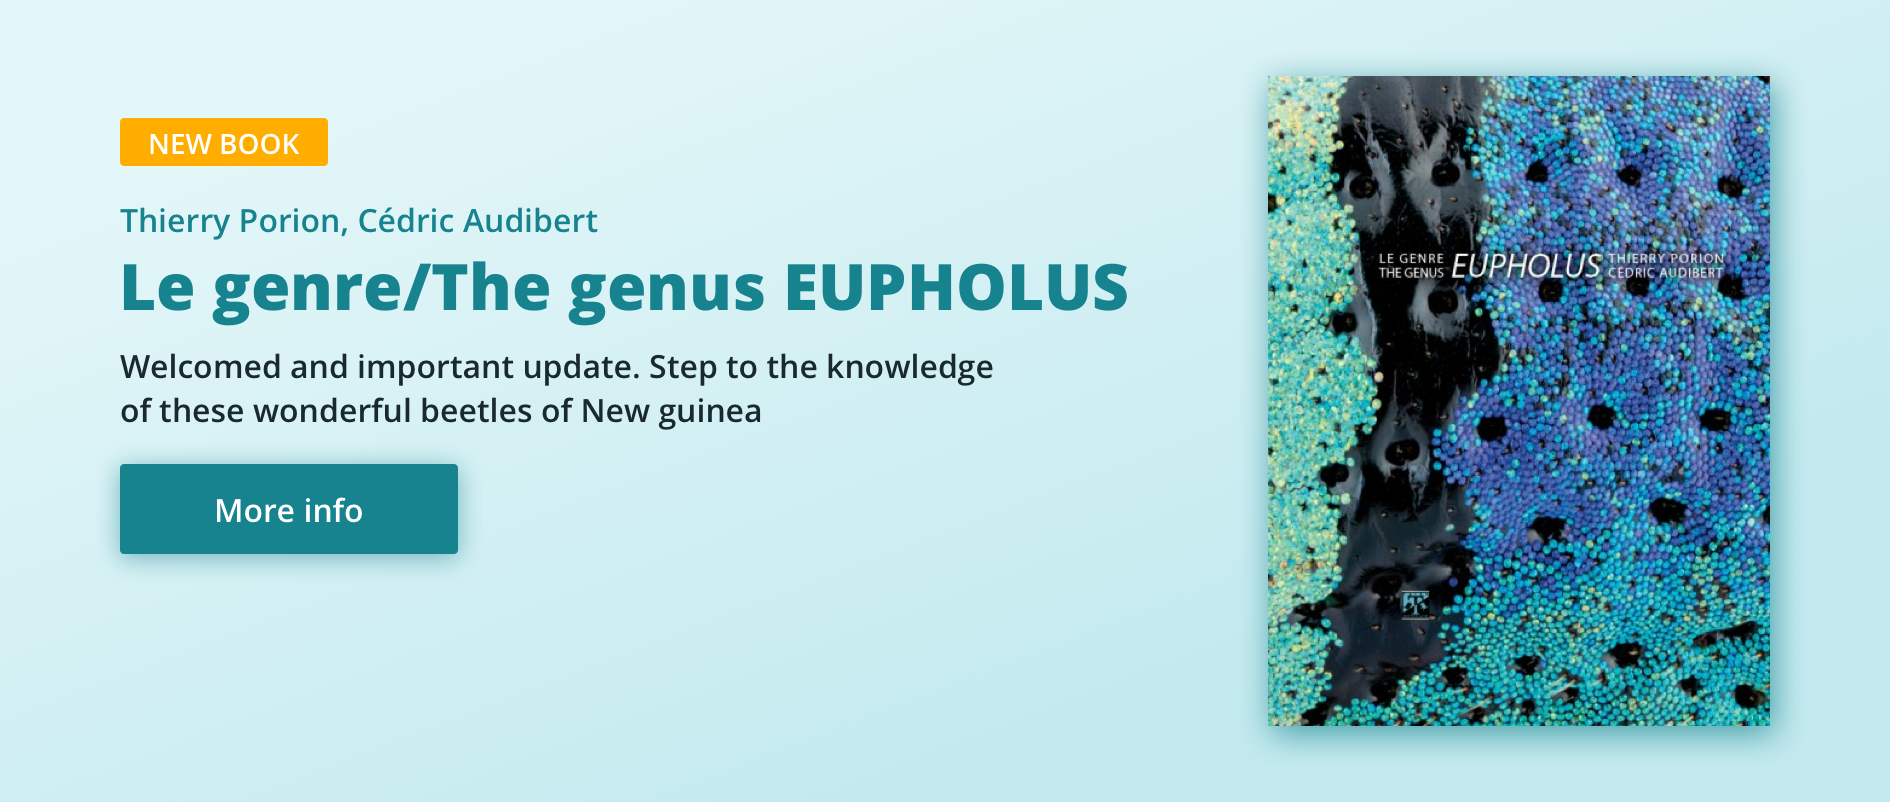 Le genre/The genus EUPHOLUS